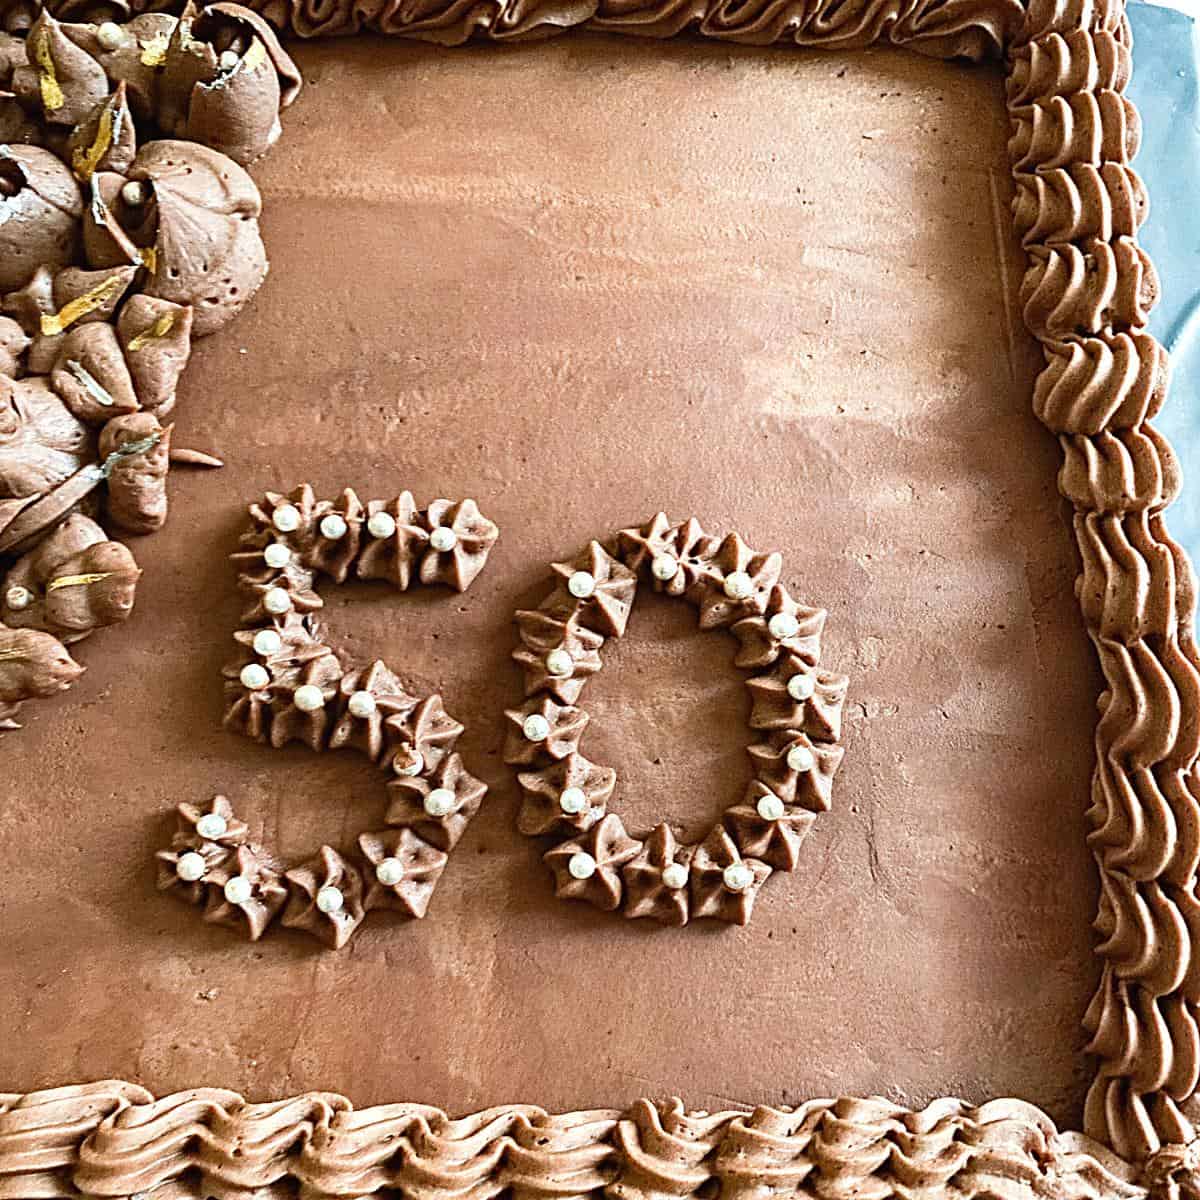 A 50th birthday cake.